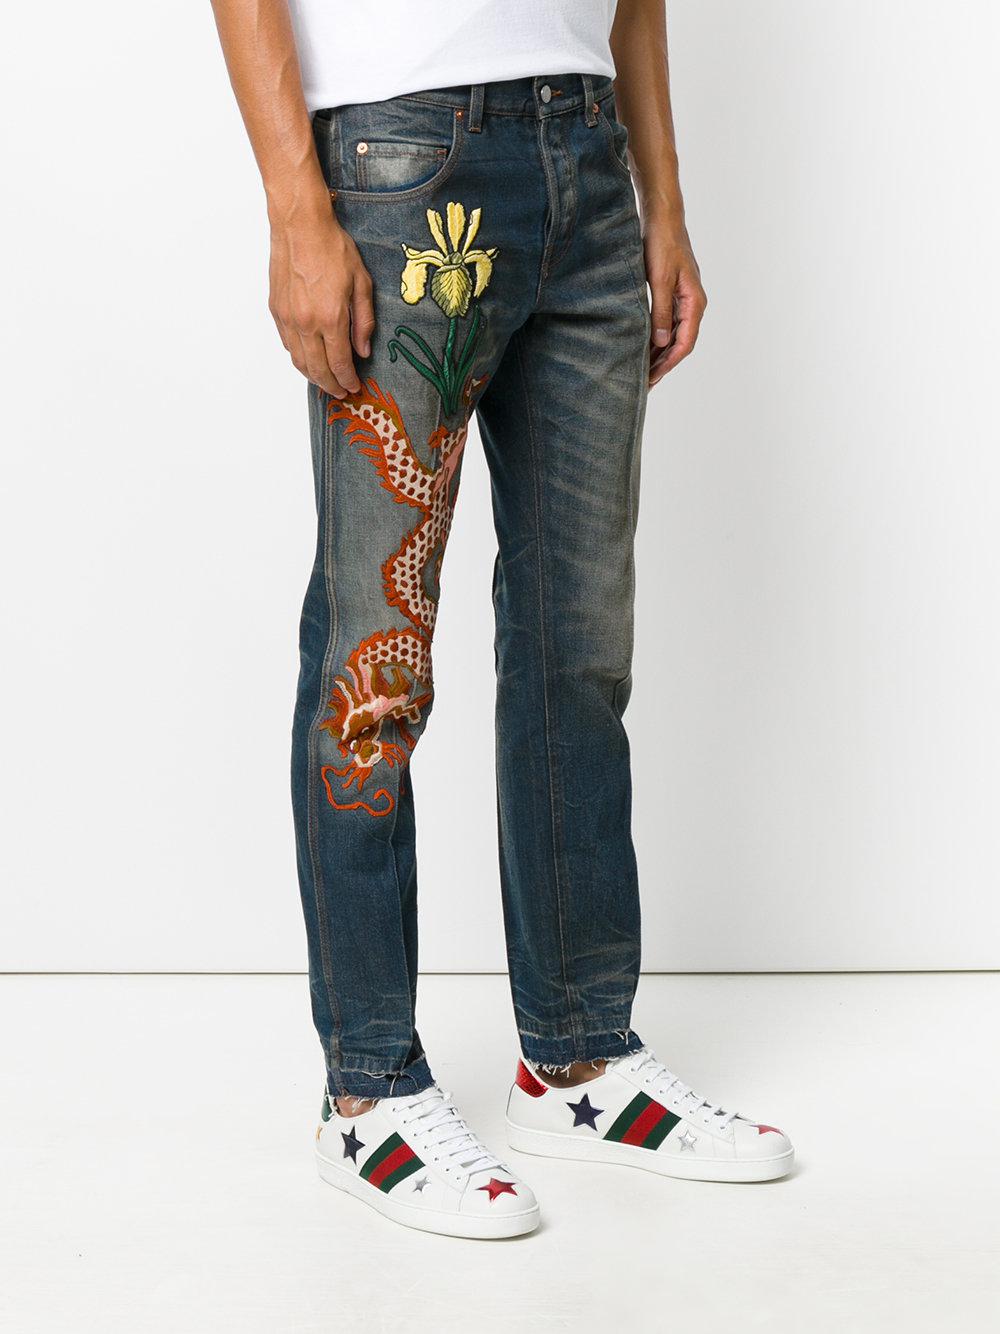 Gucci Denim Embellished Stone-washed Jeans in Blue for Men - Lyst